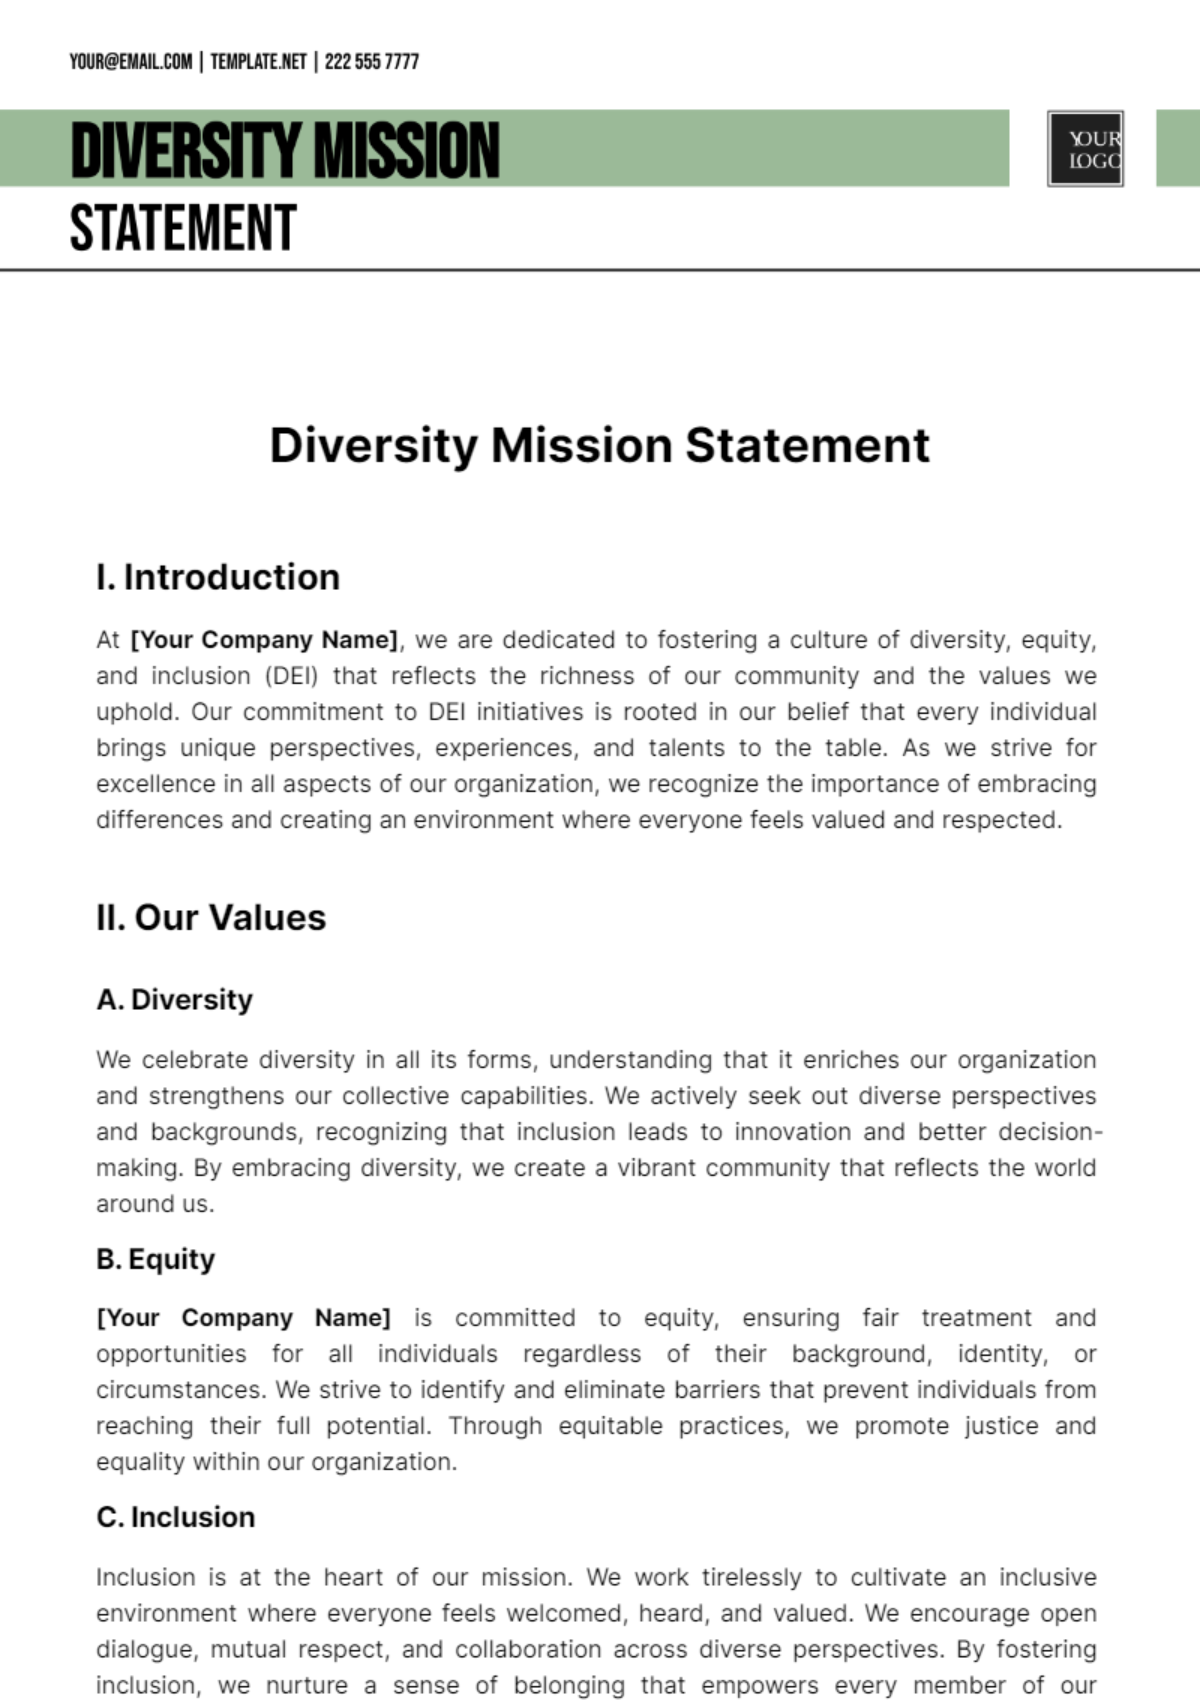 Diversity Mission Statement Template